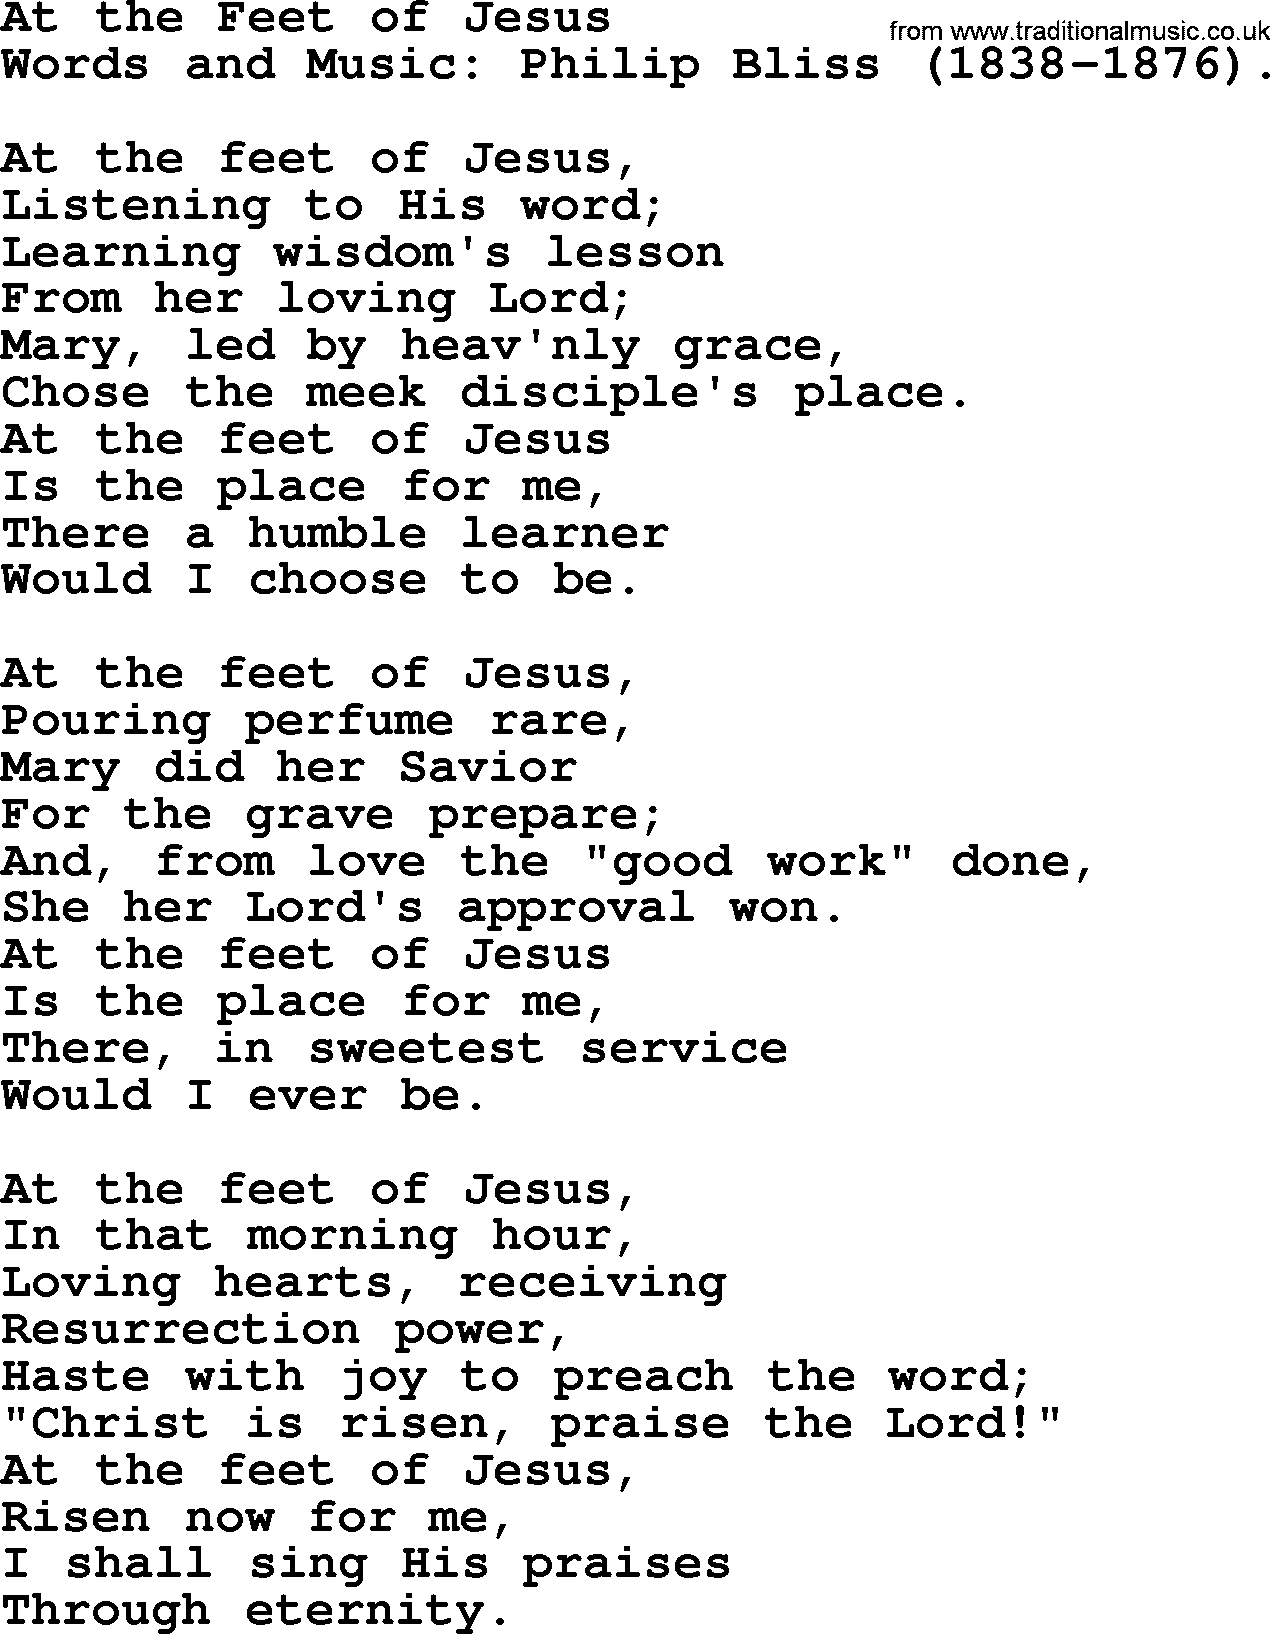 Philip Bliss Song: At The Feet Of Jesus, lyrics